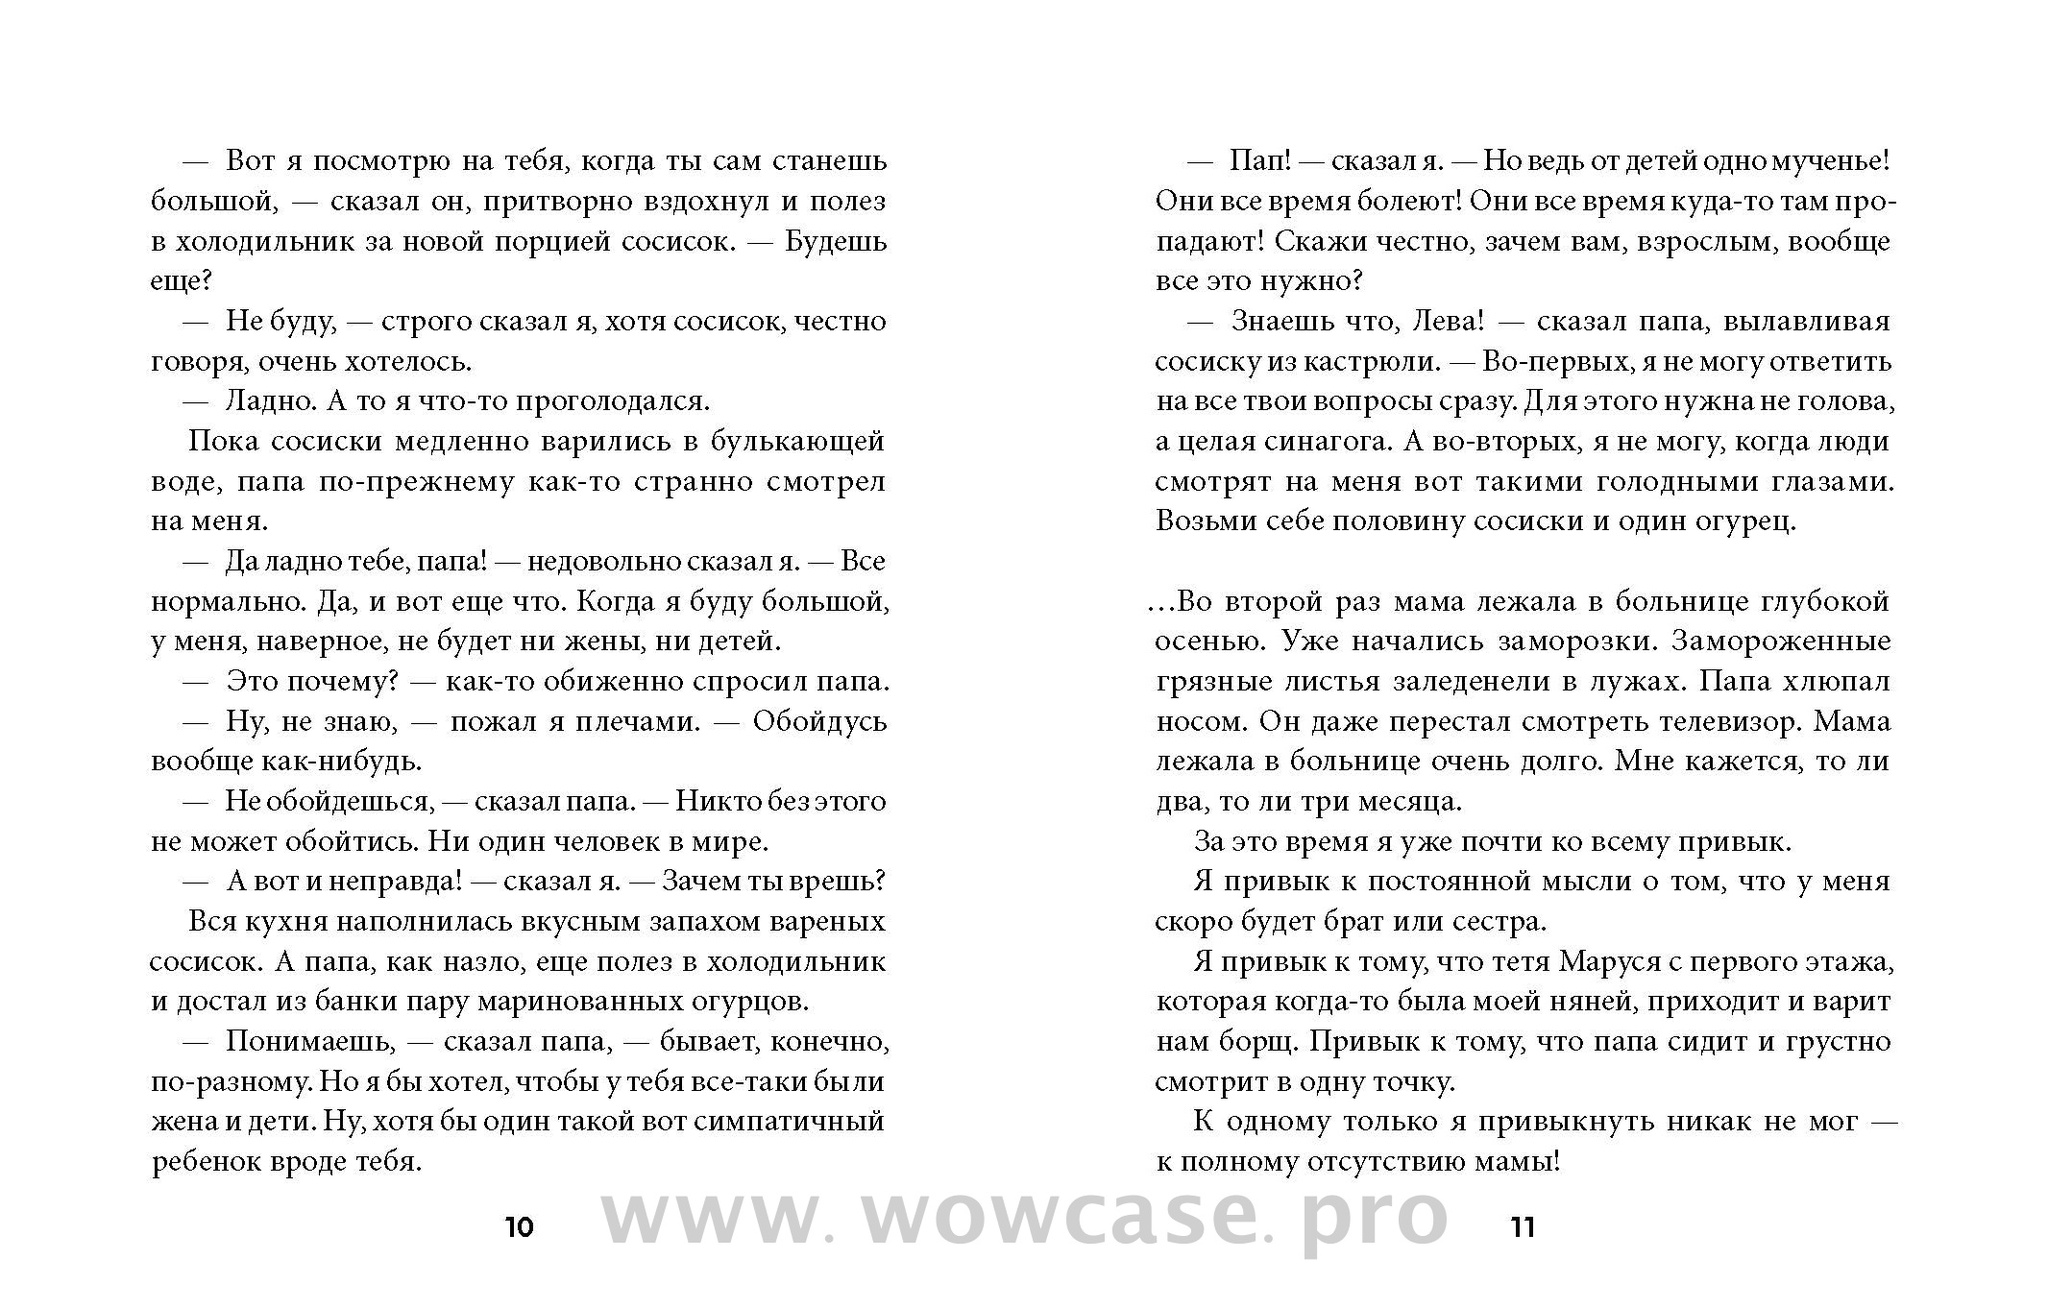 Борис Минаев "Гений дзюдо."  ISBN 978-5-904561-49-9